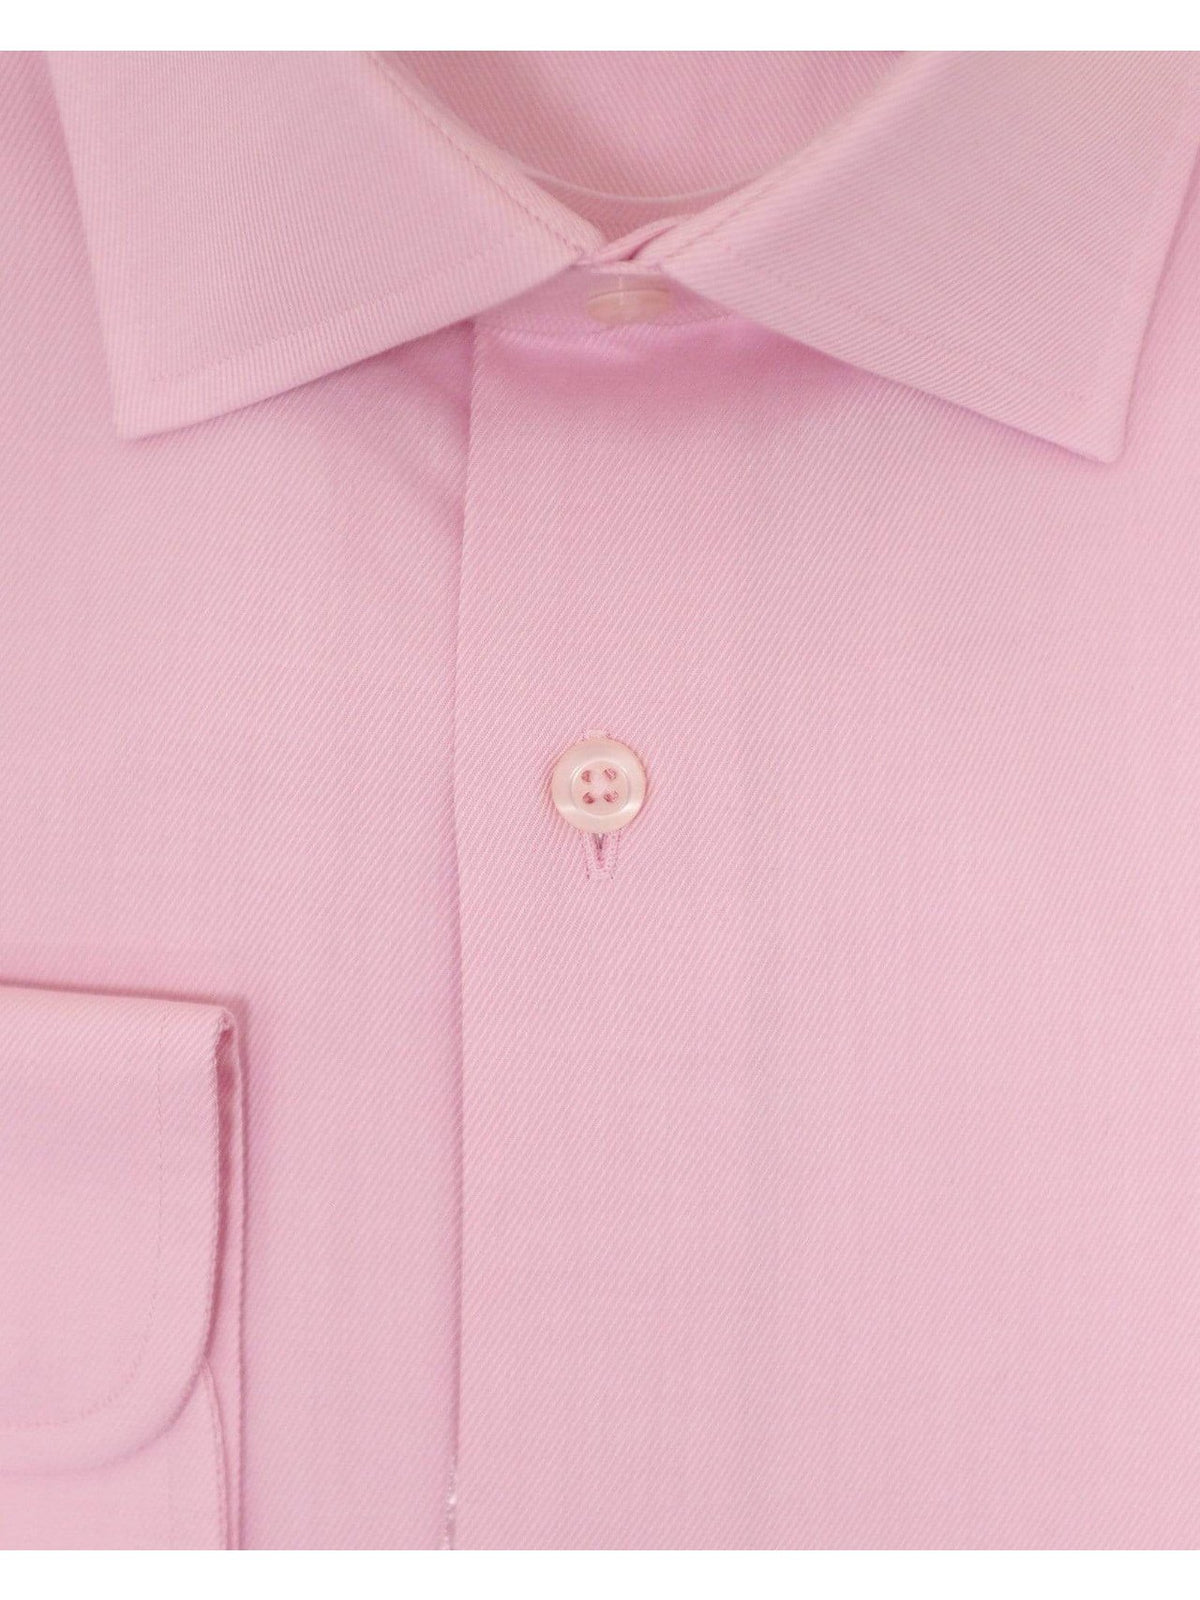 Modena SHIRTS Mens Slim Fit Solid Pink Twill Spread Collar Cotton Blend Dress Shirt